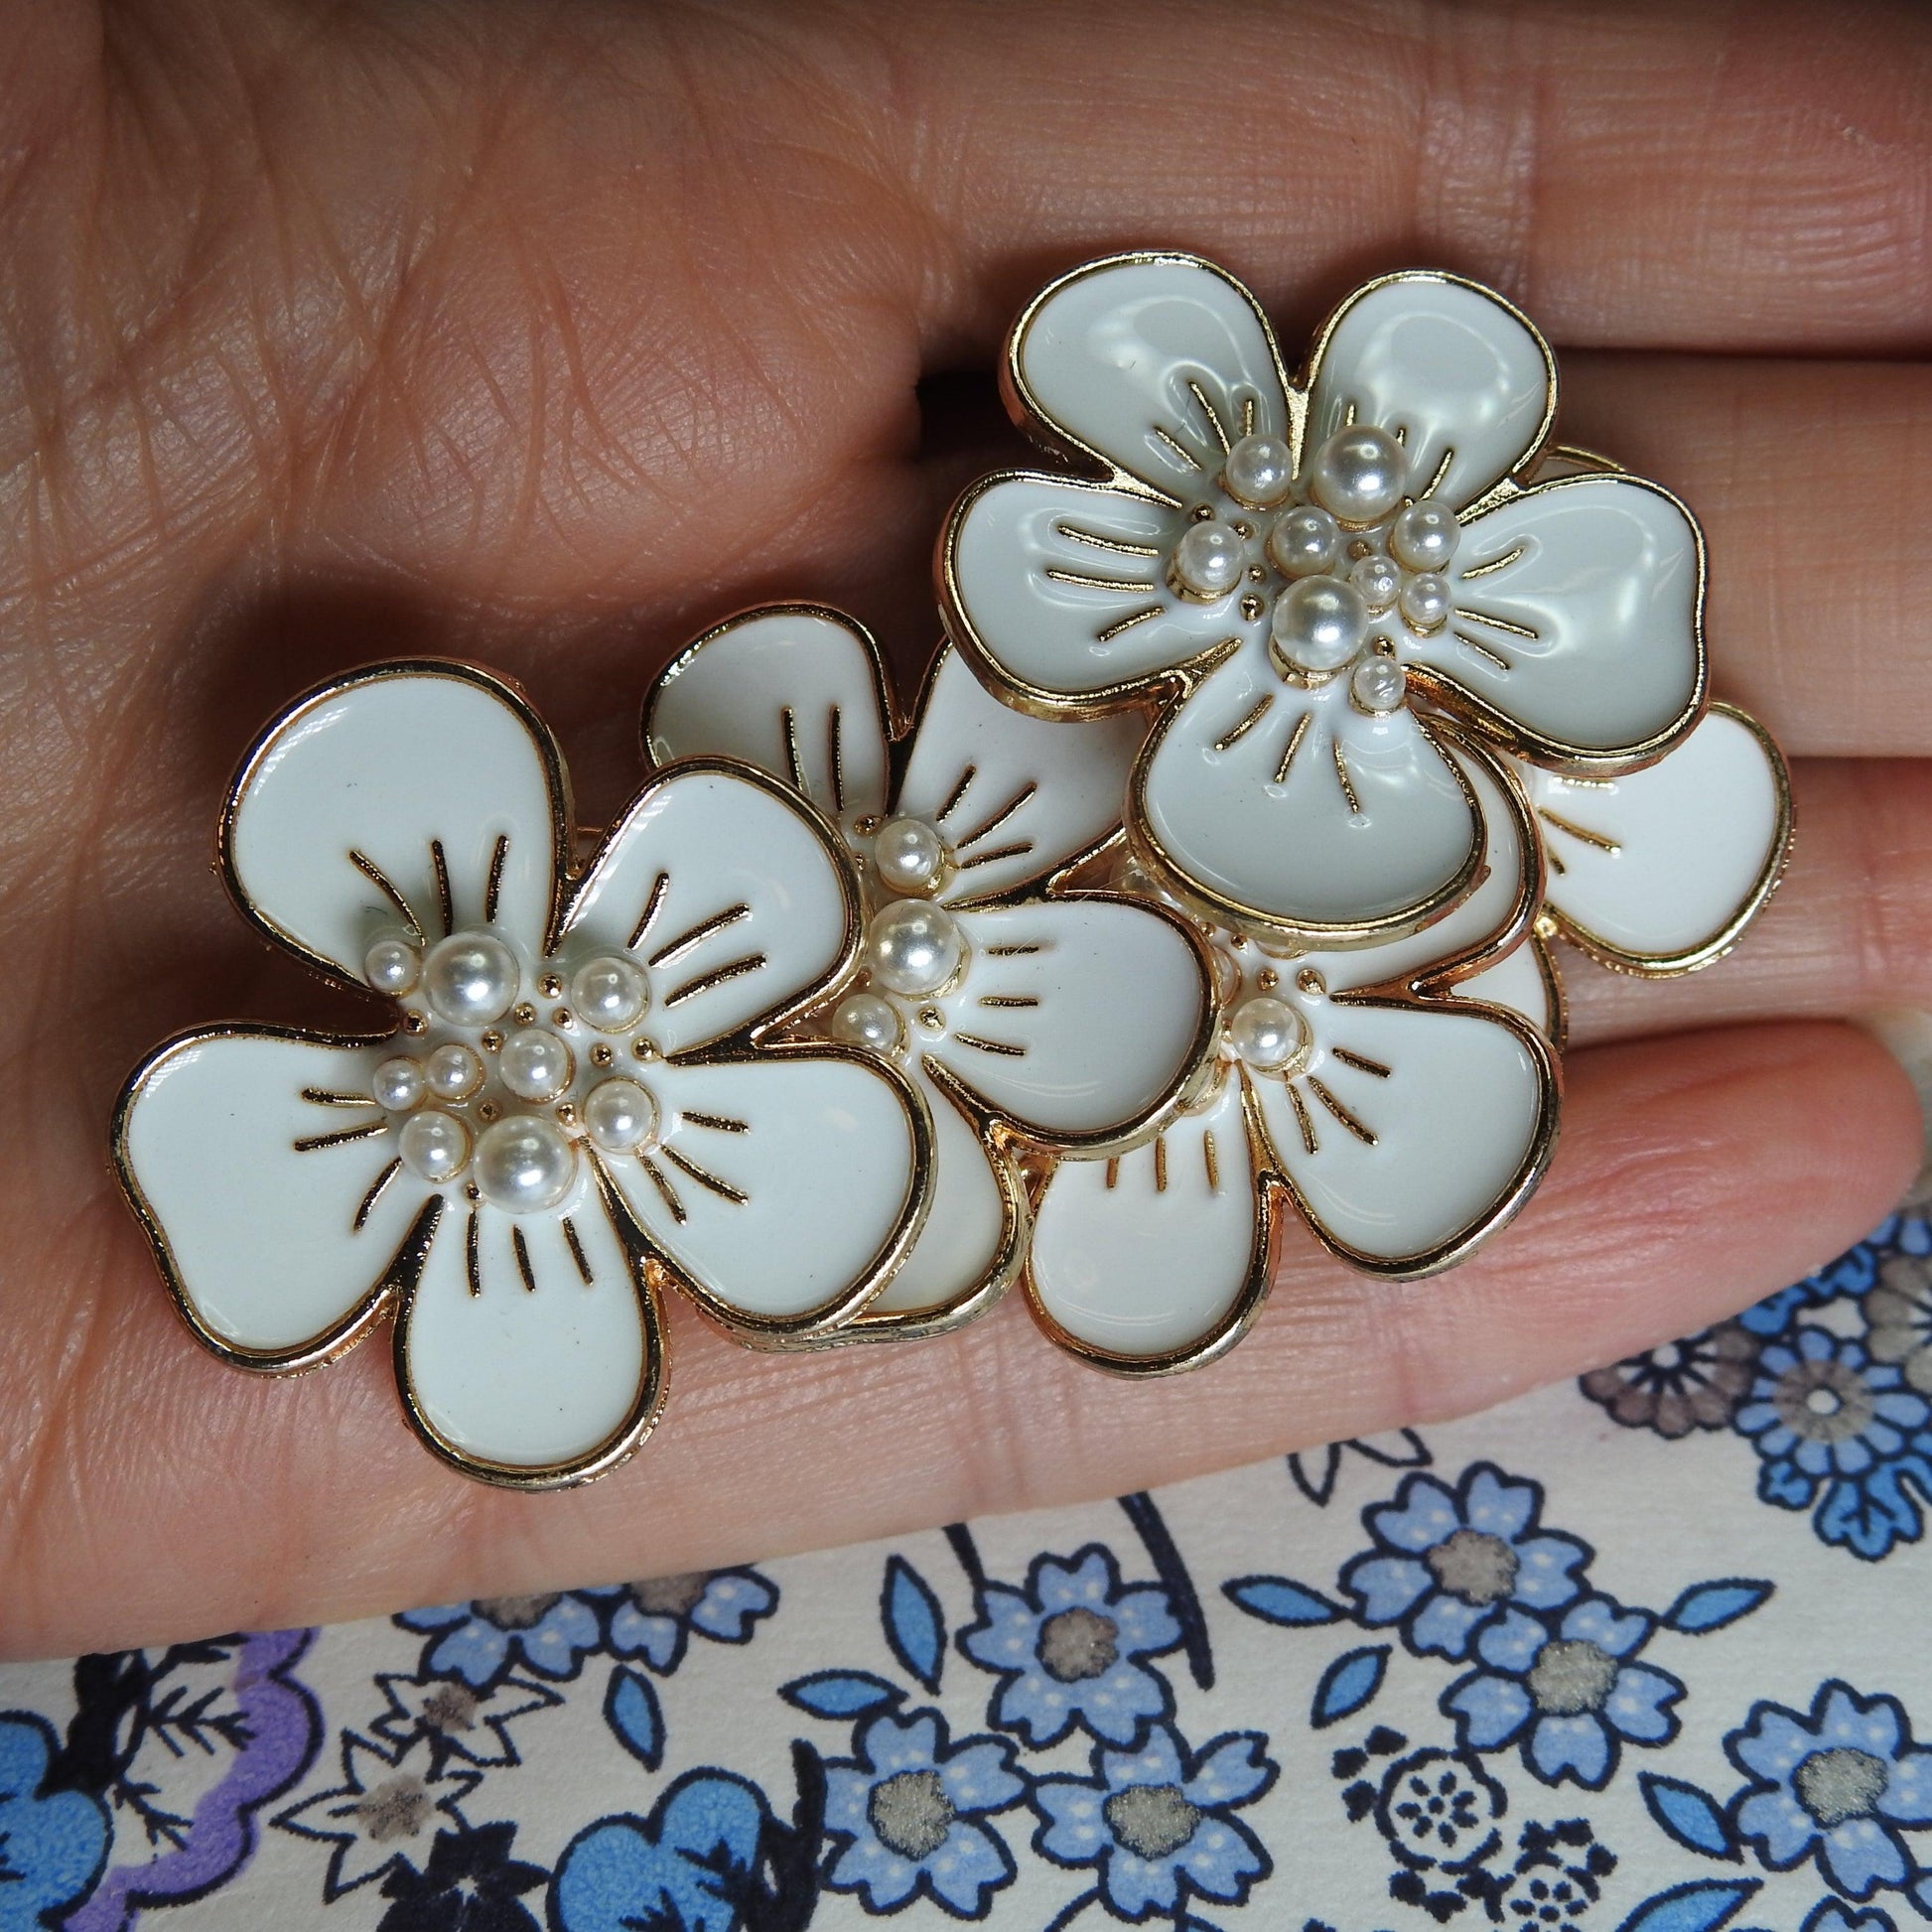 floral buttons